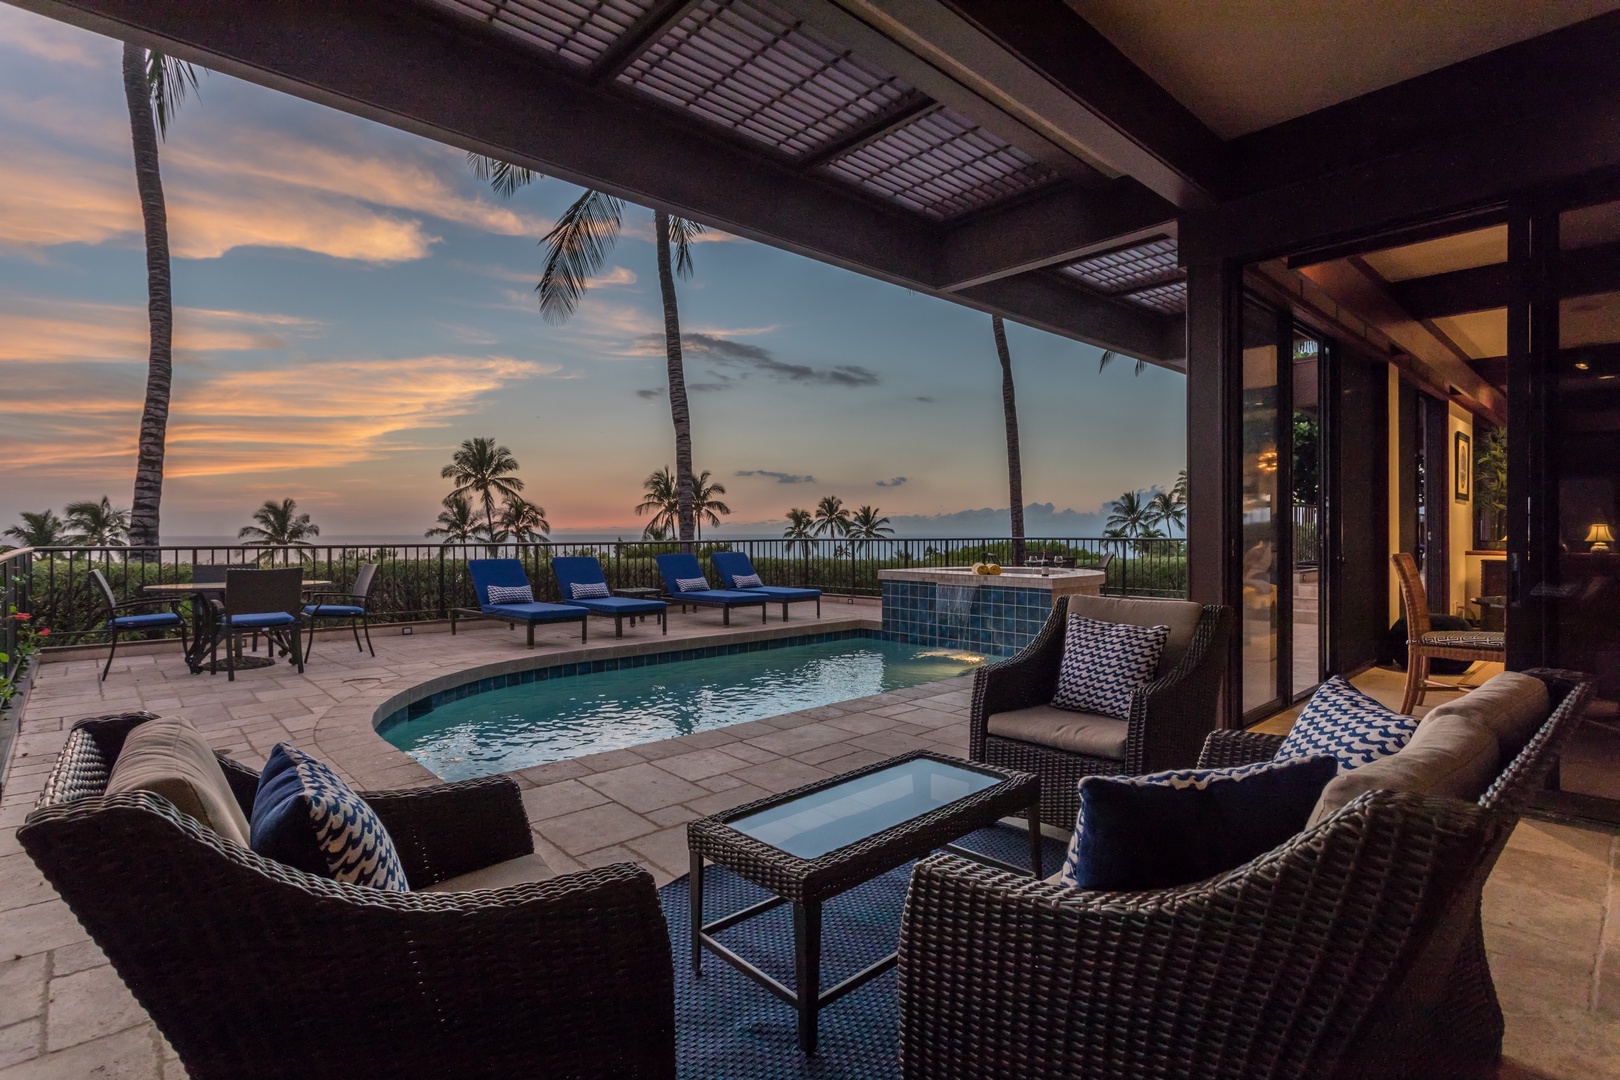 Kamuela Vacation Rentals, OFB 3BD Villas (39) at Mauna Kea Resort - Alternate view of primary deck seating at sunset.